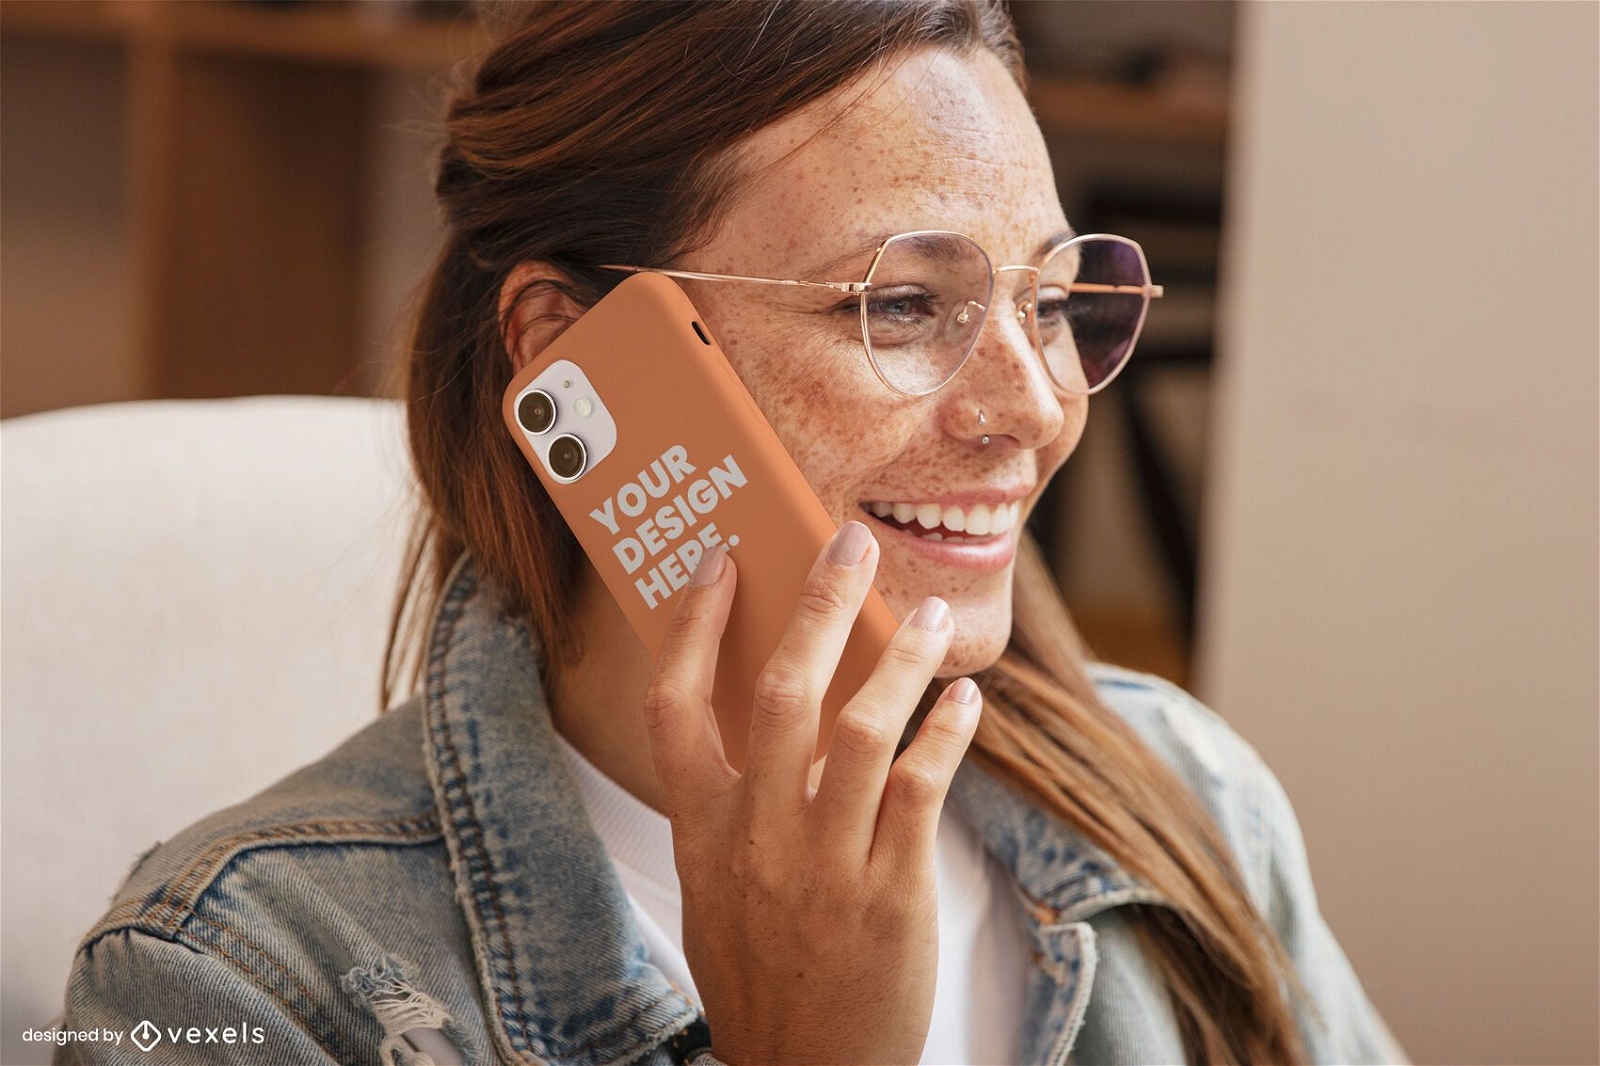 Chica con gafas riendo maqueta de caja de teléfono